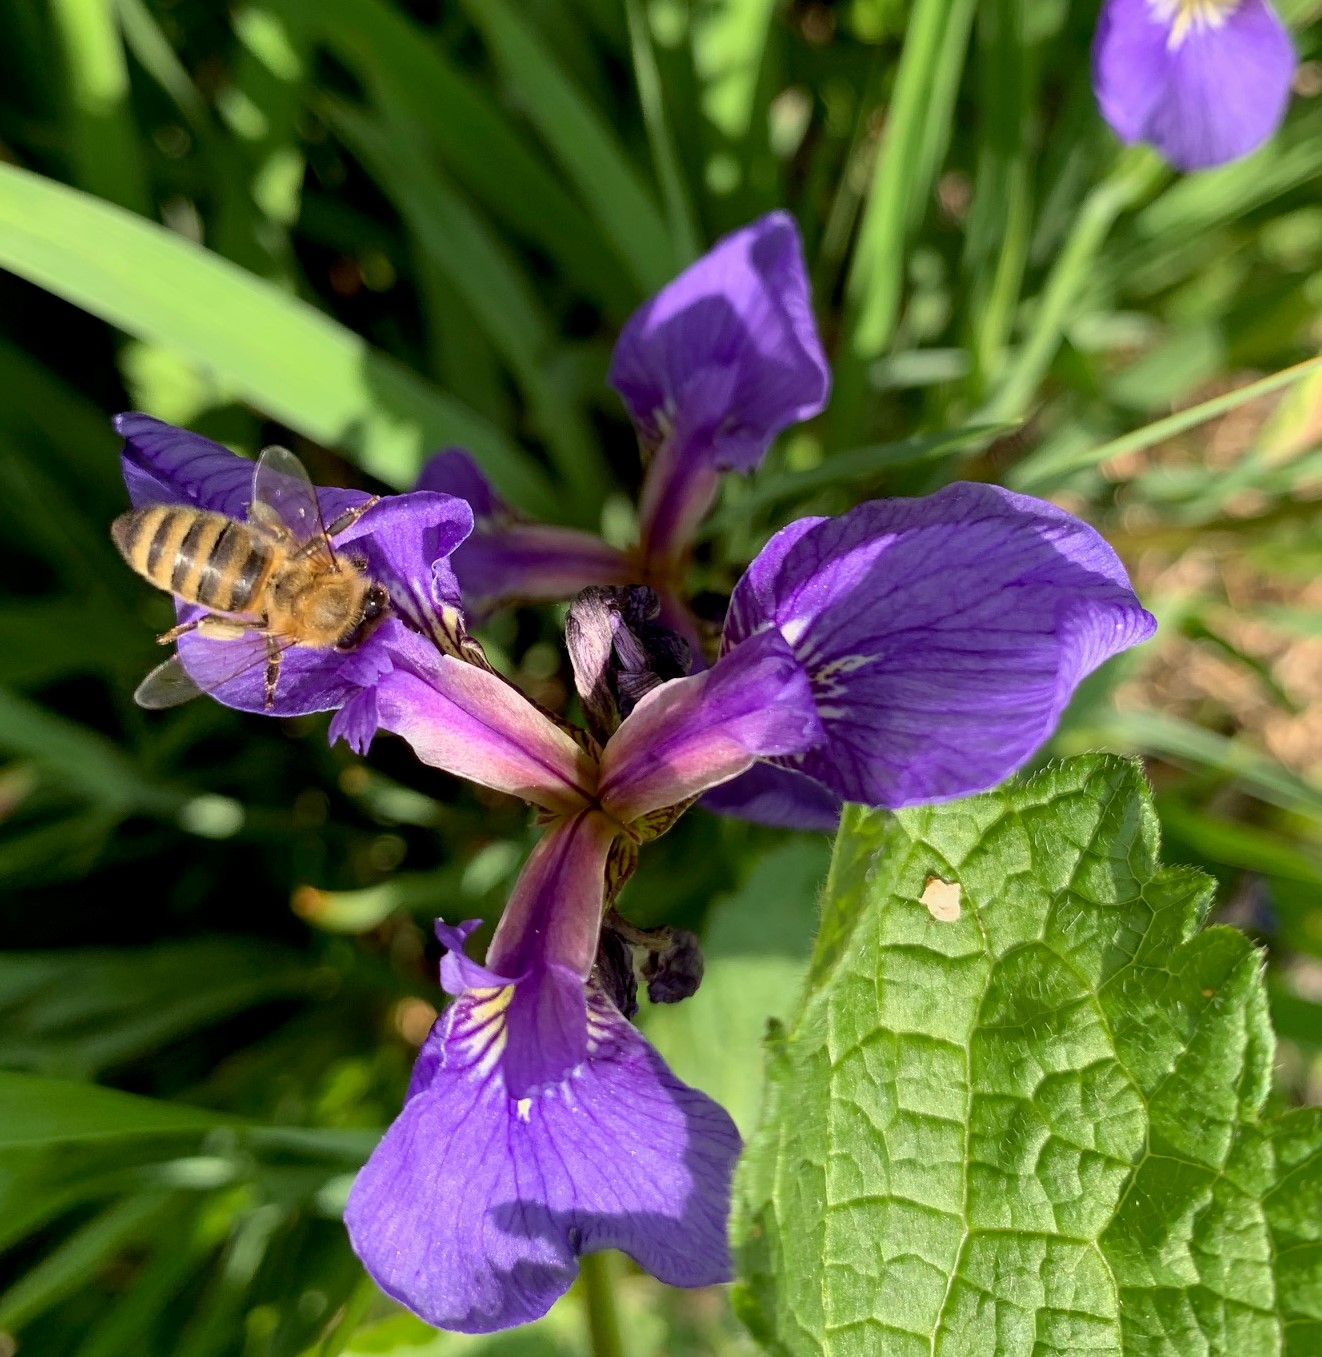 A bee lands on a petal of a purple iris